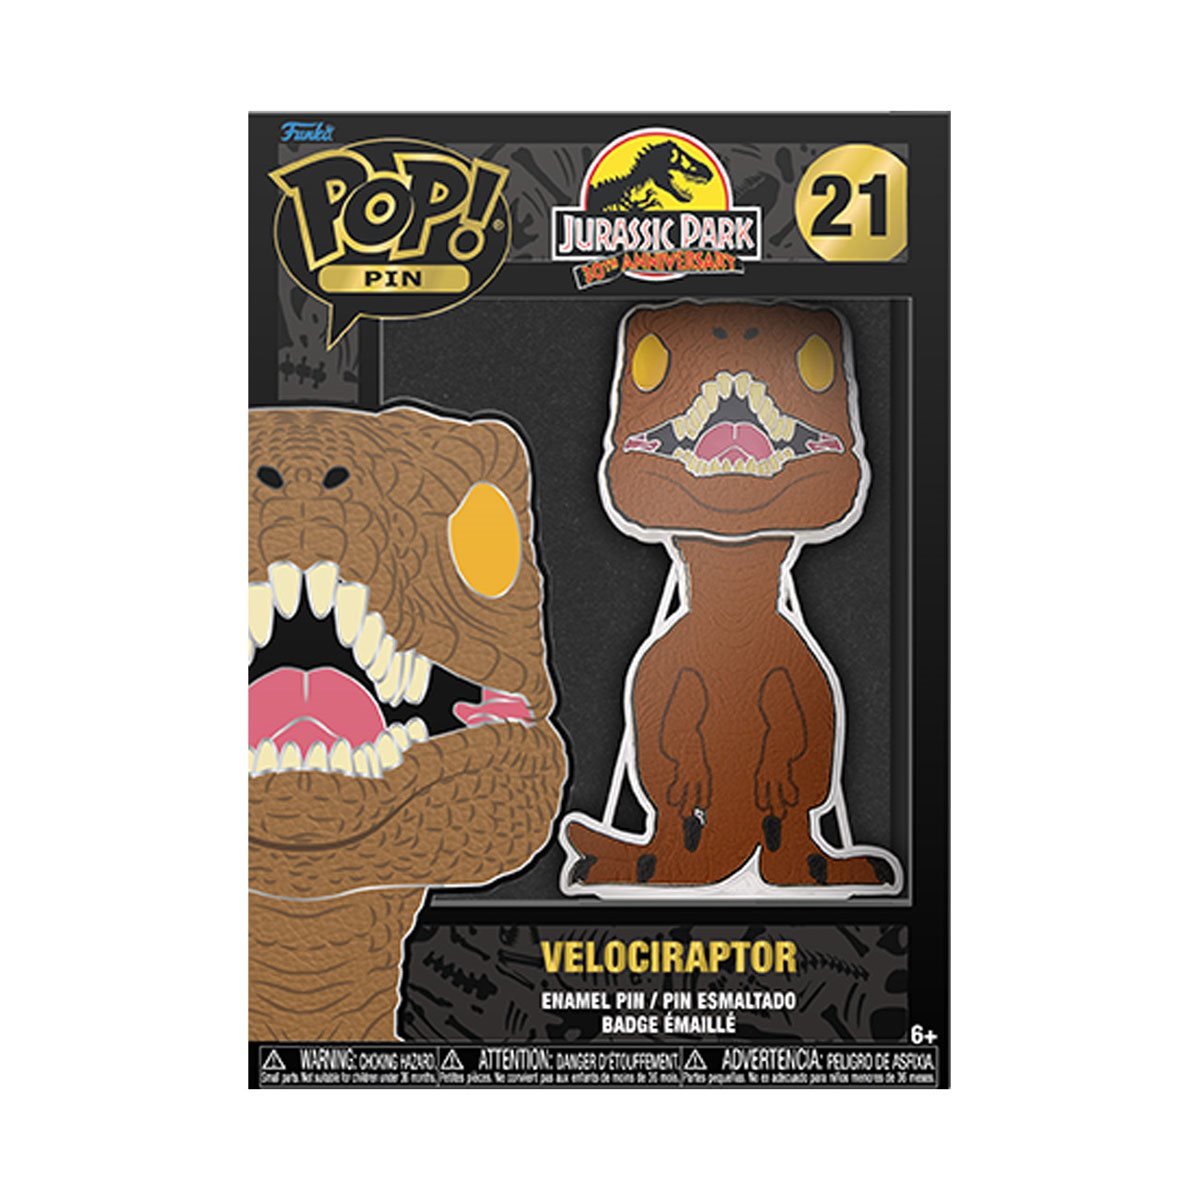 Funko Pop! Jurassic Park Velociraptor Large Enamel Pin #21